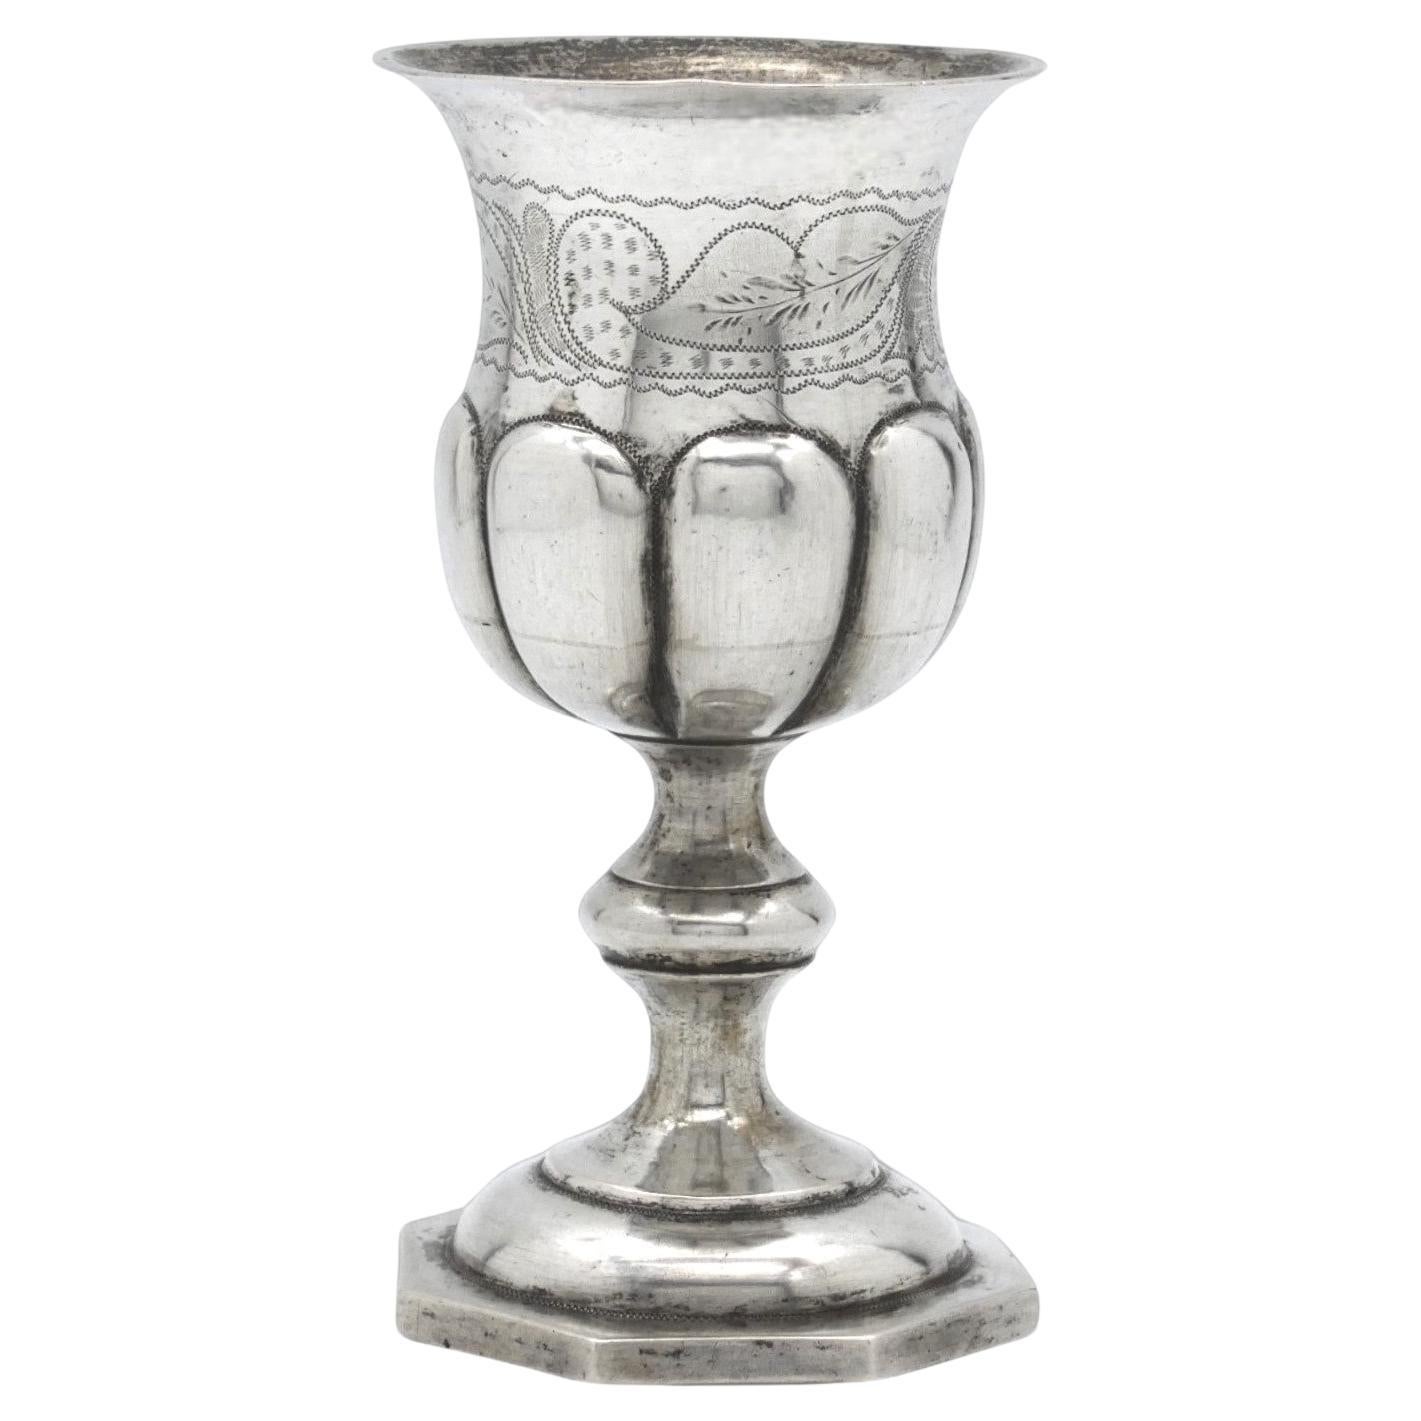 A Silver Kiddush Goblet, Poland mid 19th Century